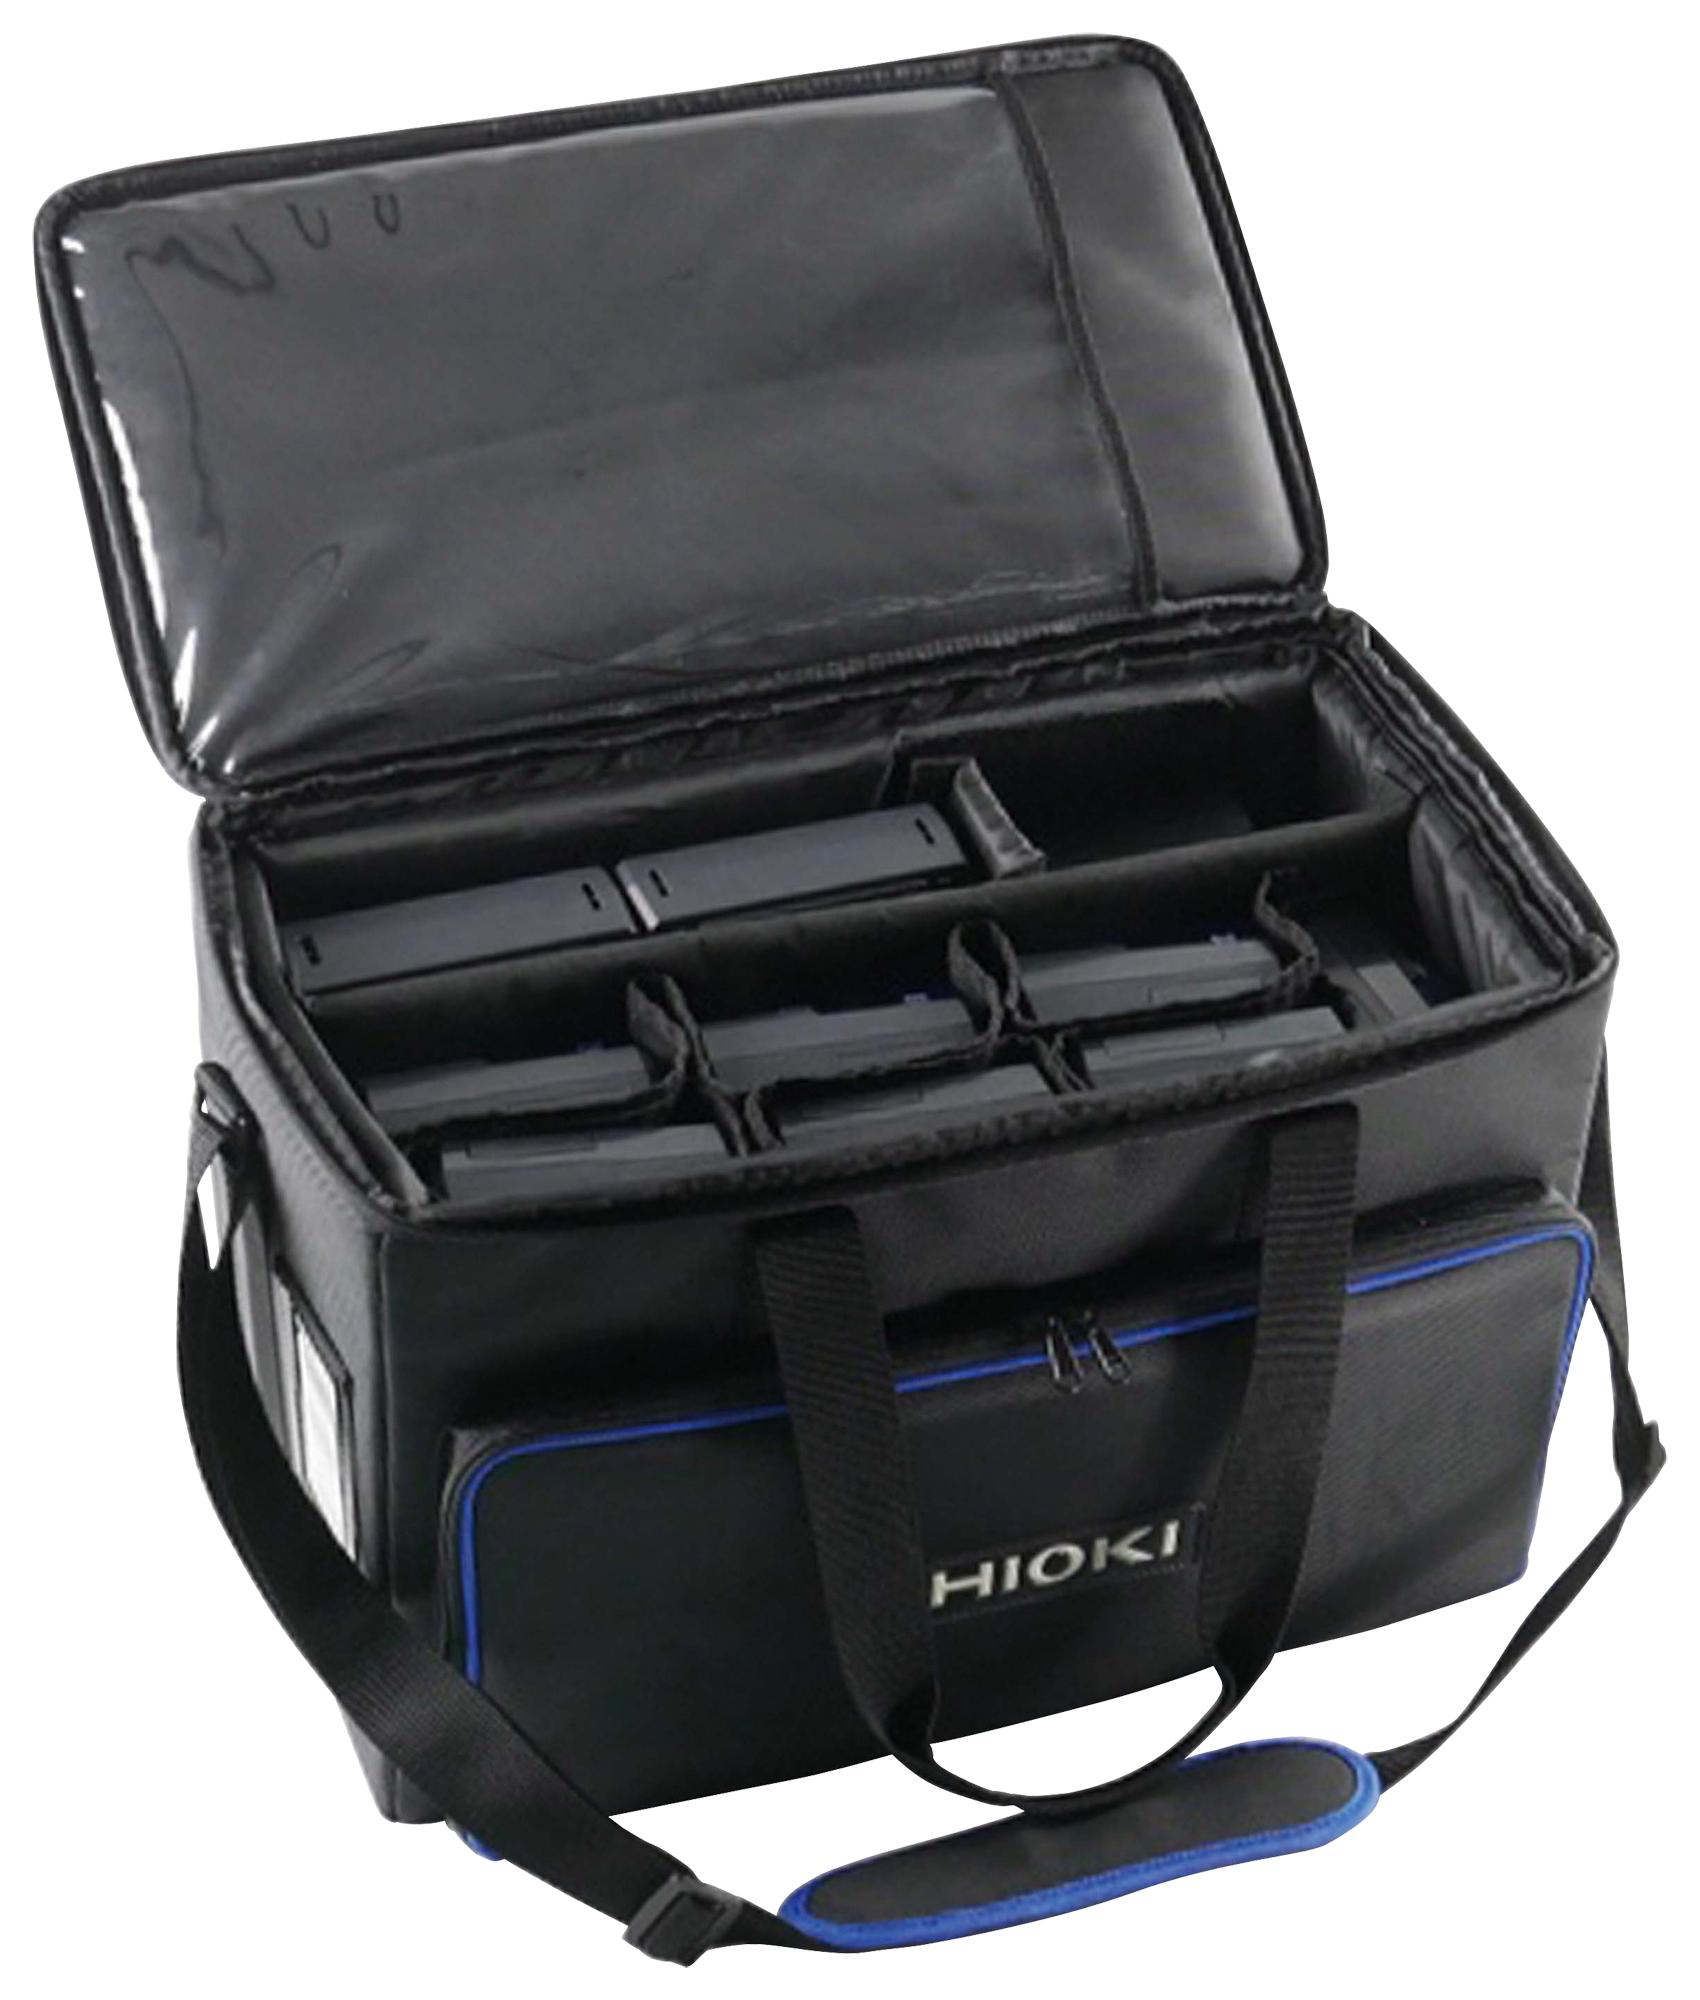 Hioki C1012 Carrying Case, Memory Hicorder